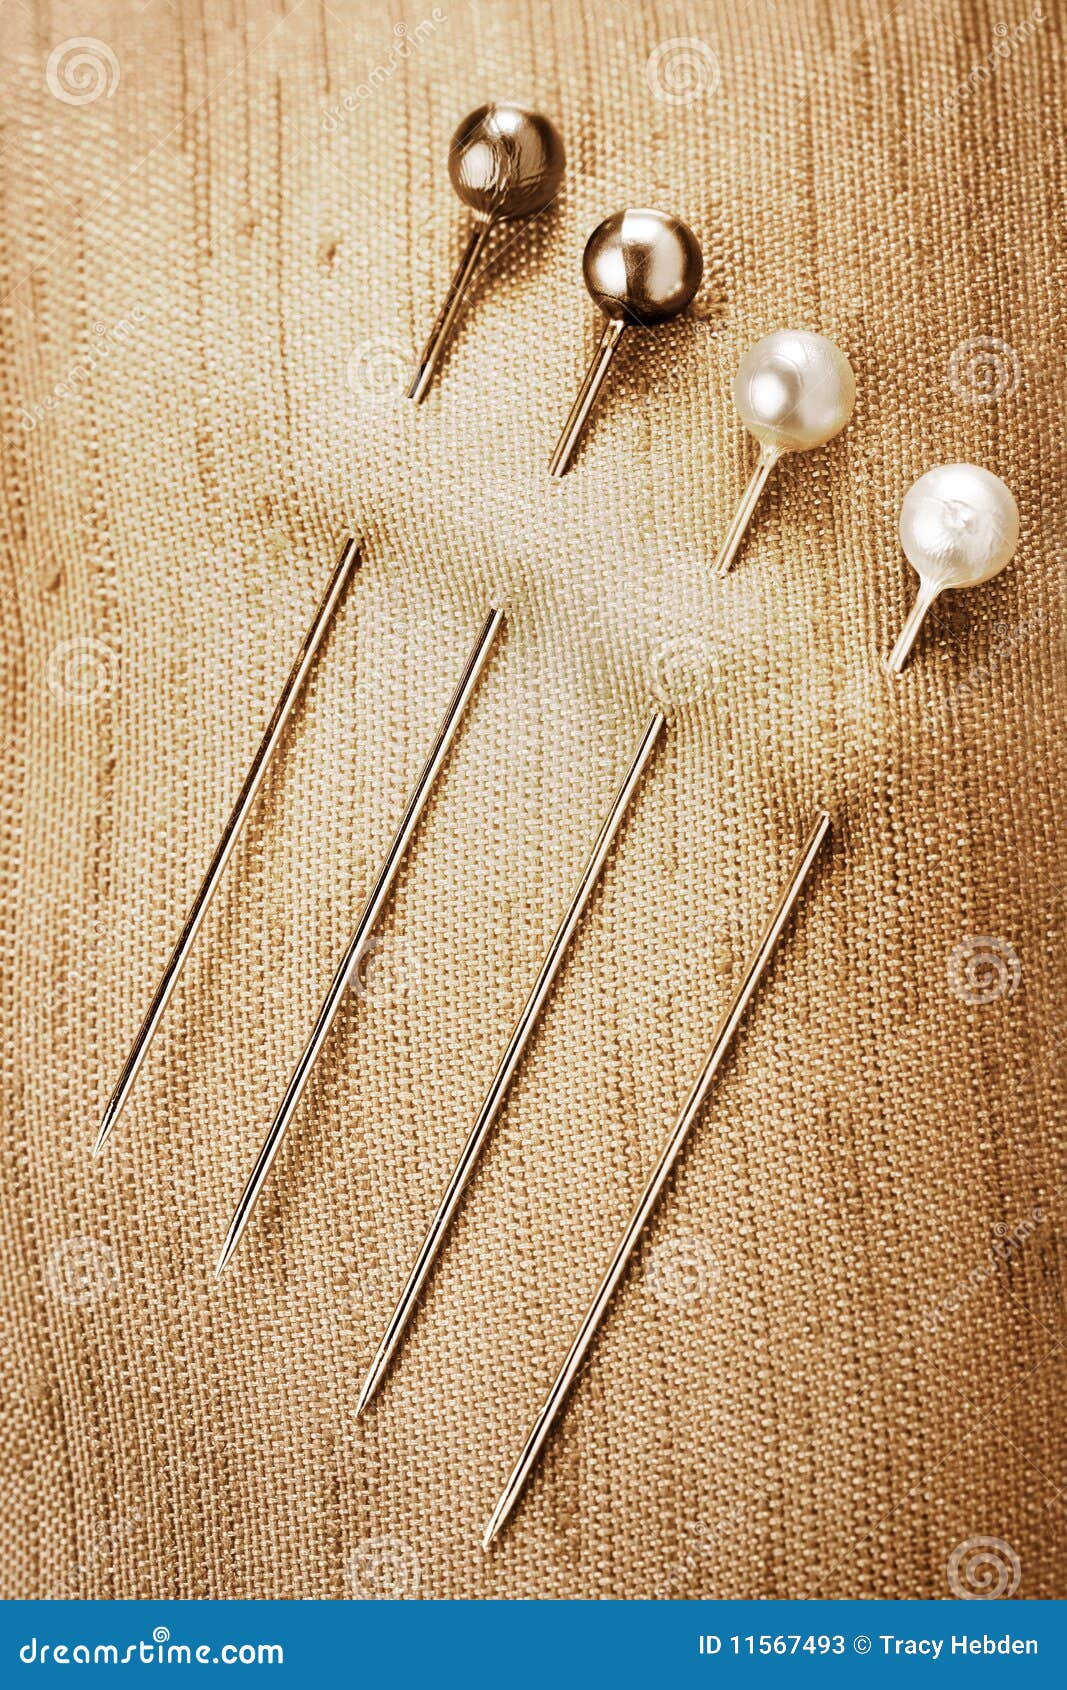 Sewing pins stock image. Image of pins, needlecraft, craft - 11567493